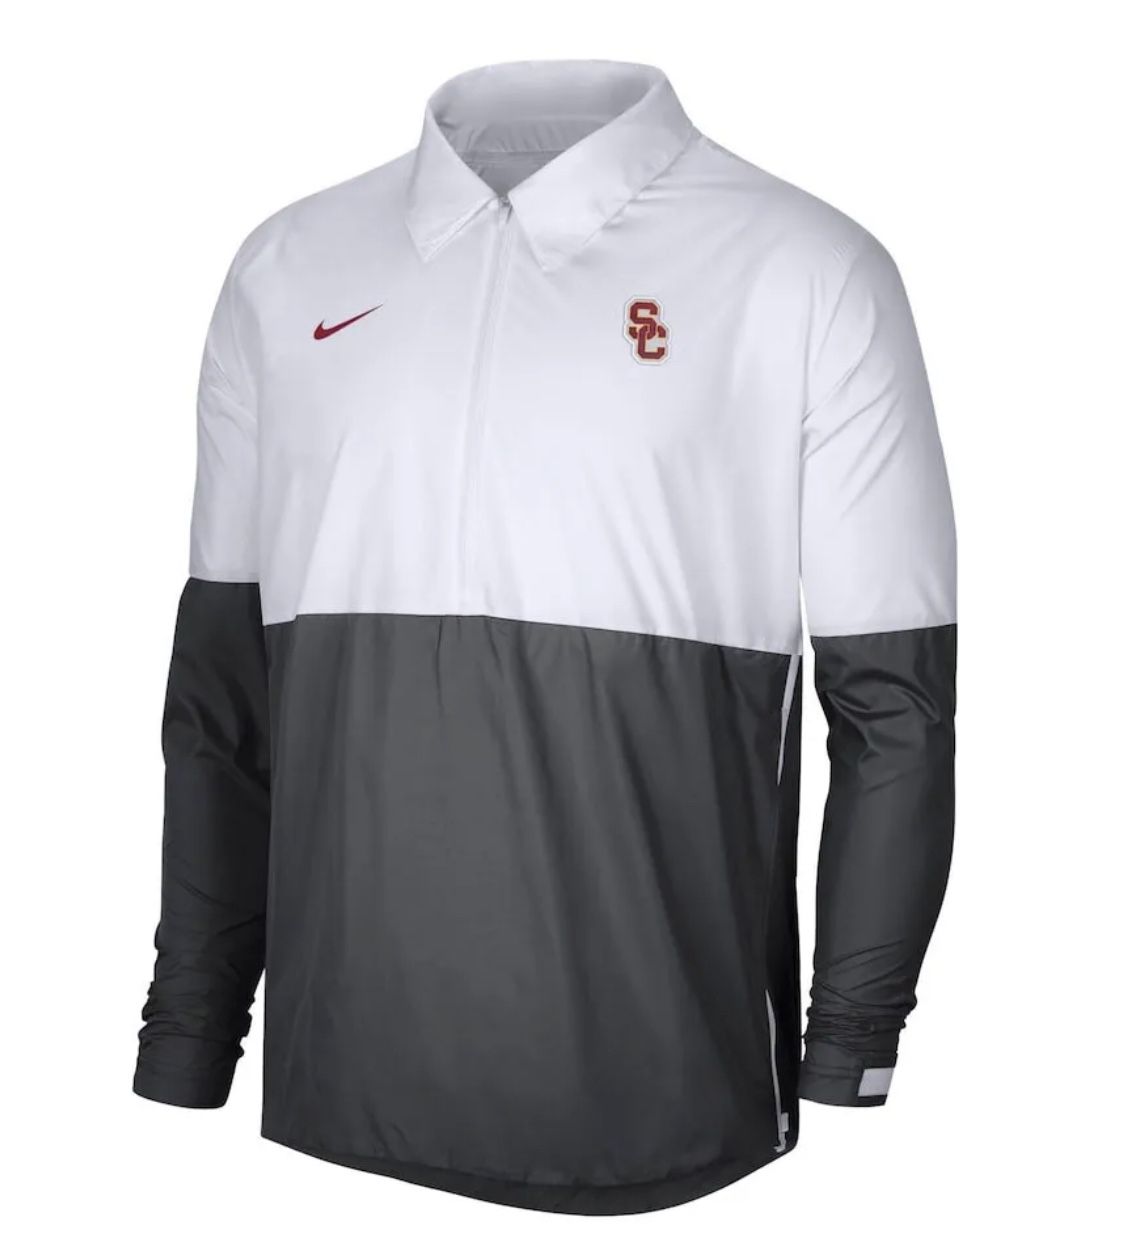 Men's Nike White/Anthracite USC Trojans Lightweight Coaches Jacket Size Large